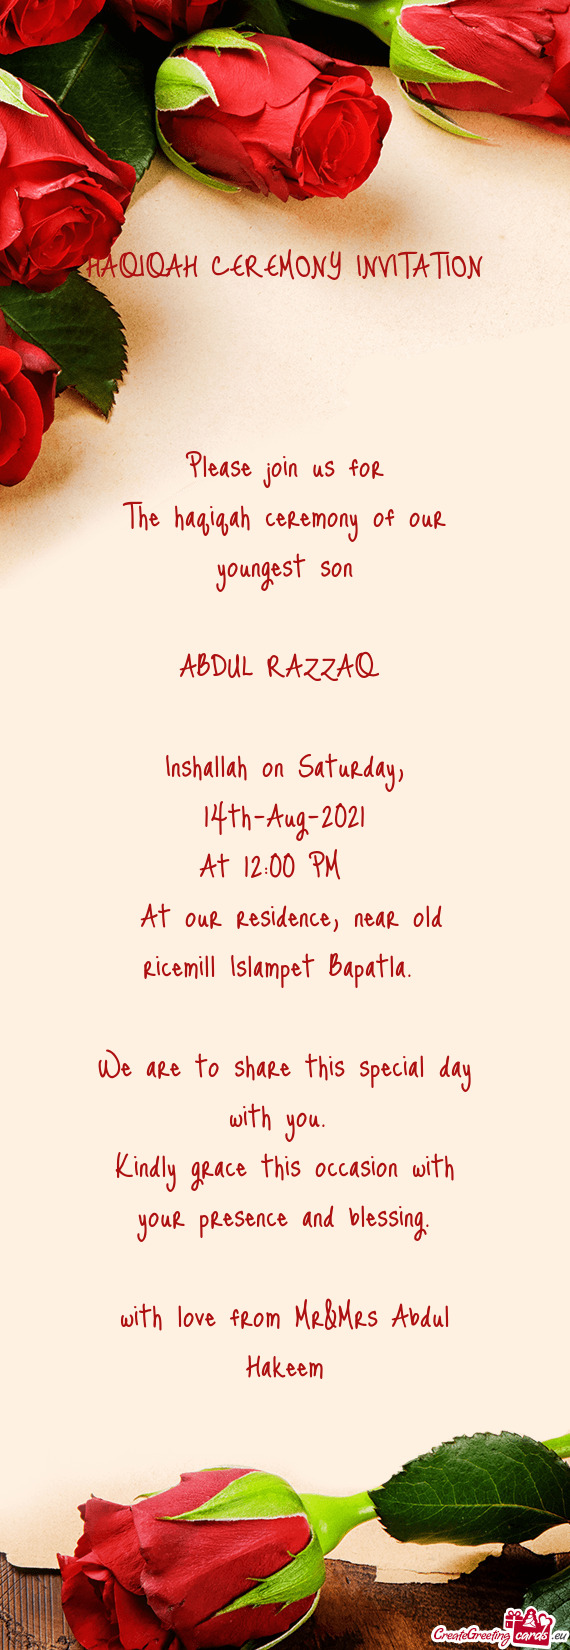 Inshallah on Saturday, 14th-Aug-2021